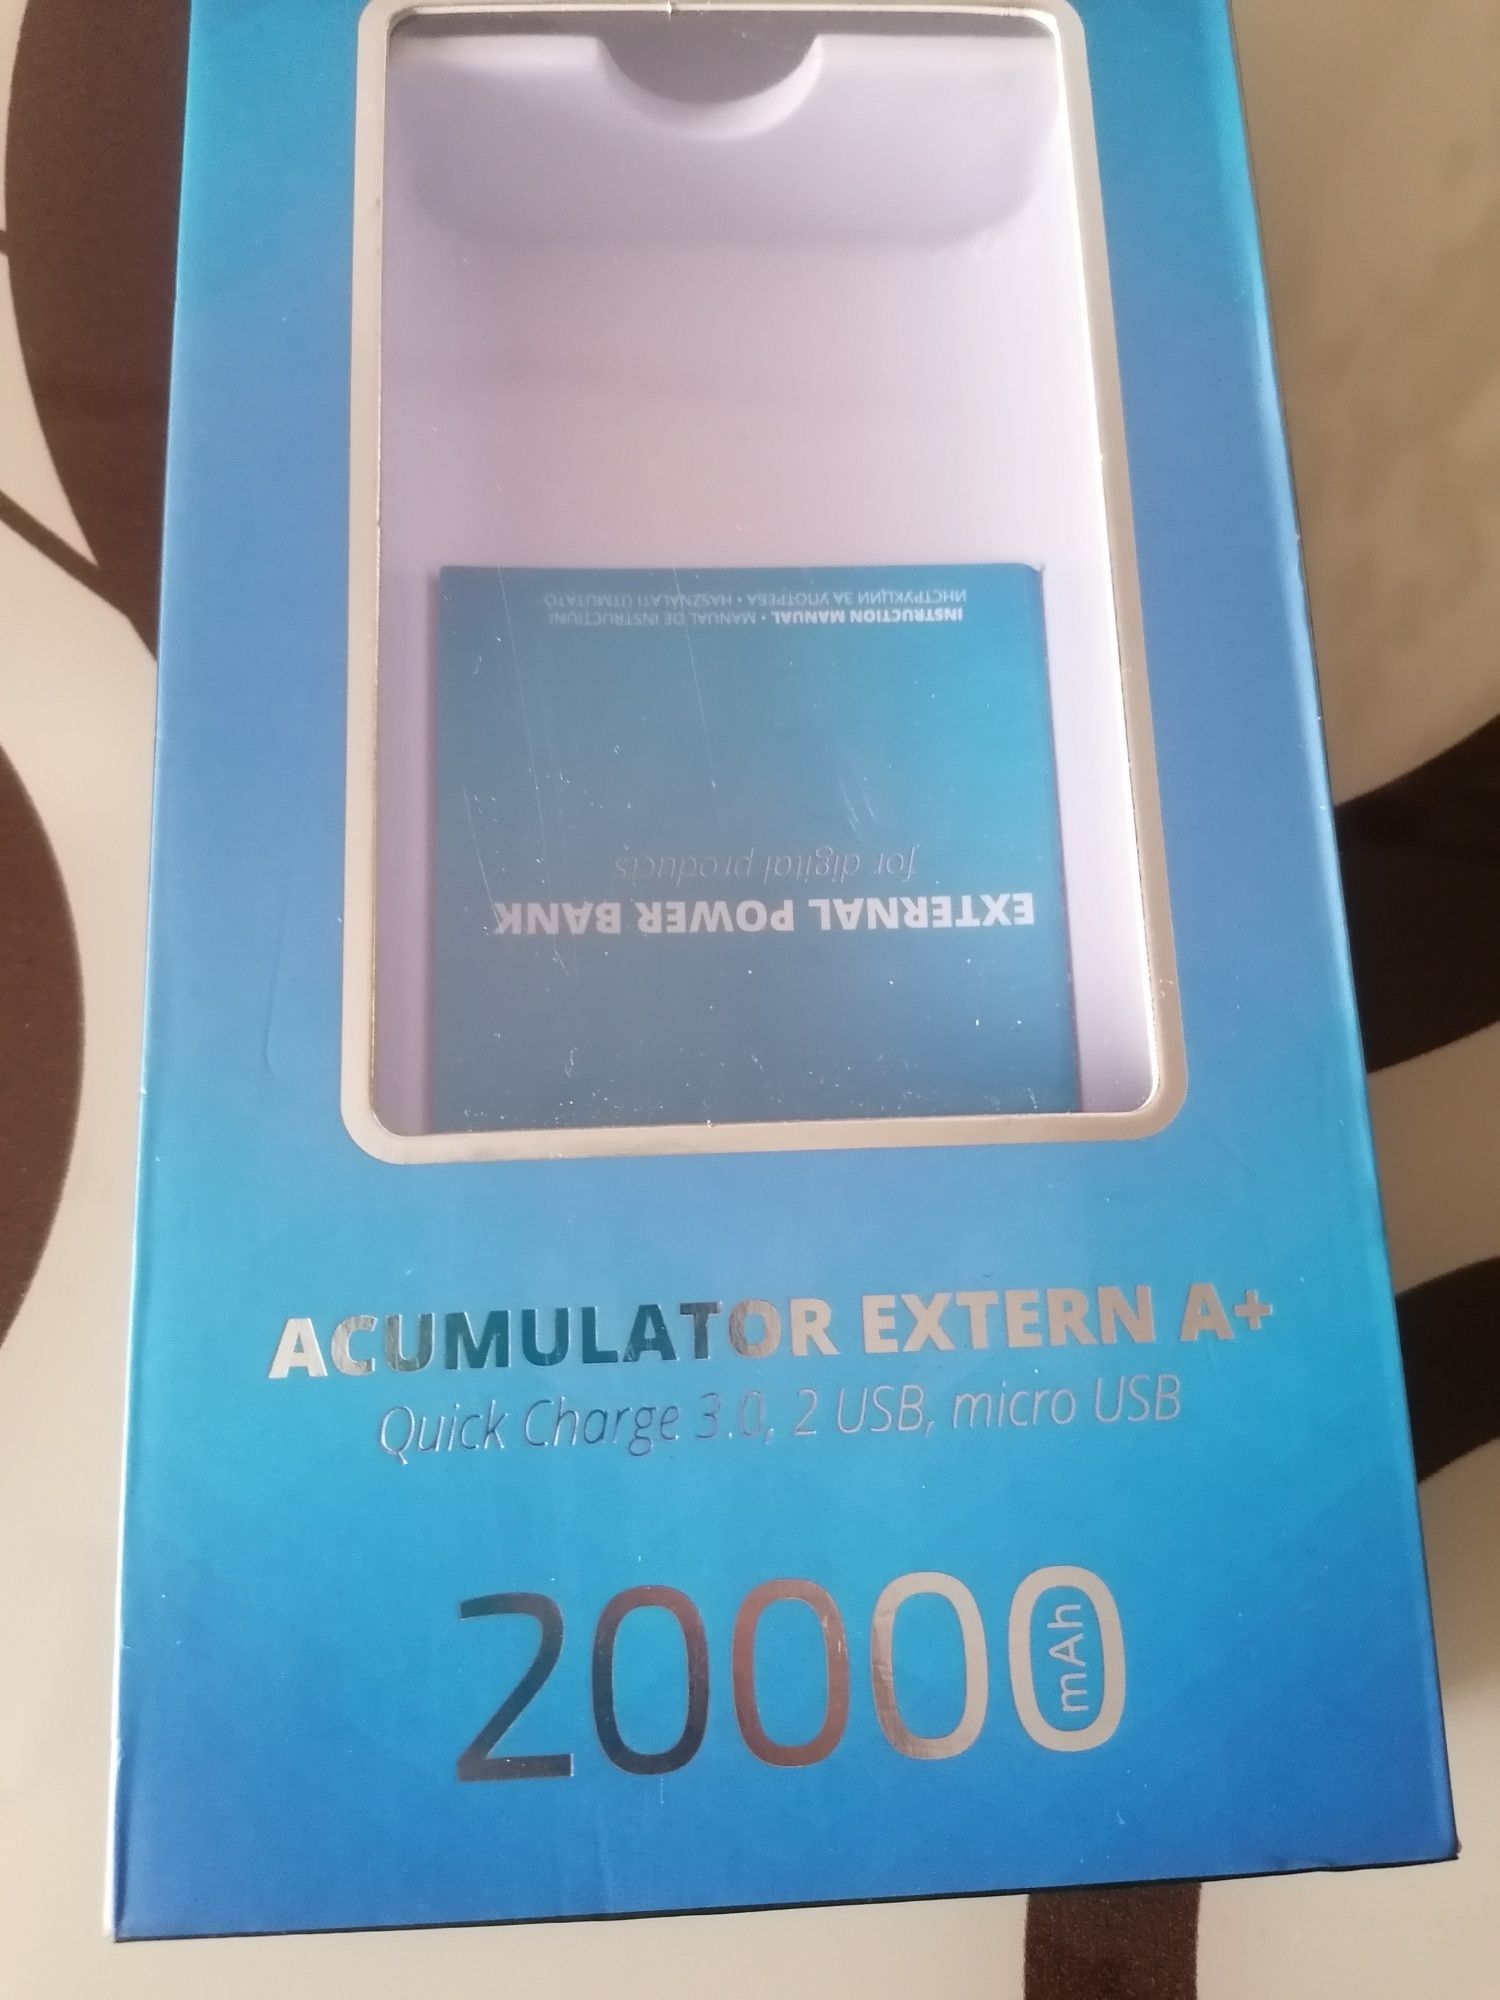 Acumulator extern 20000 mAh Quick Charge 3.0, 2 USB, micro usb